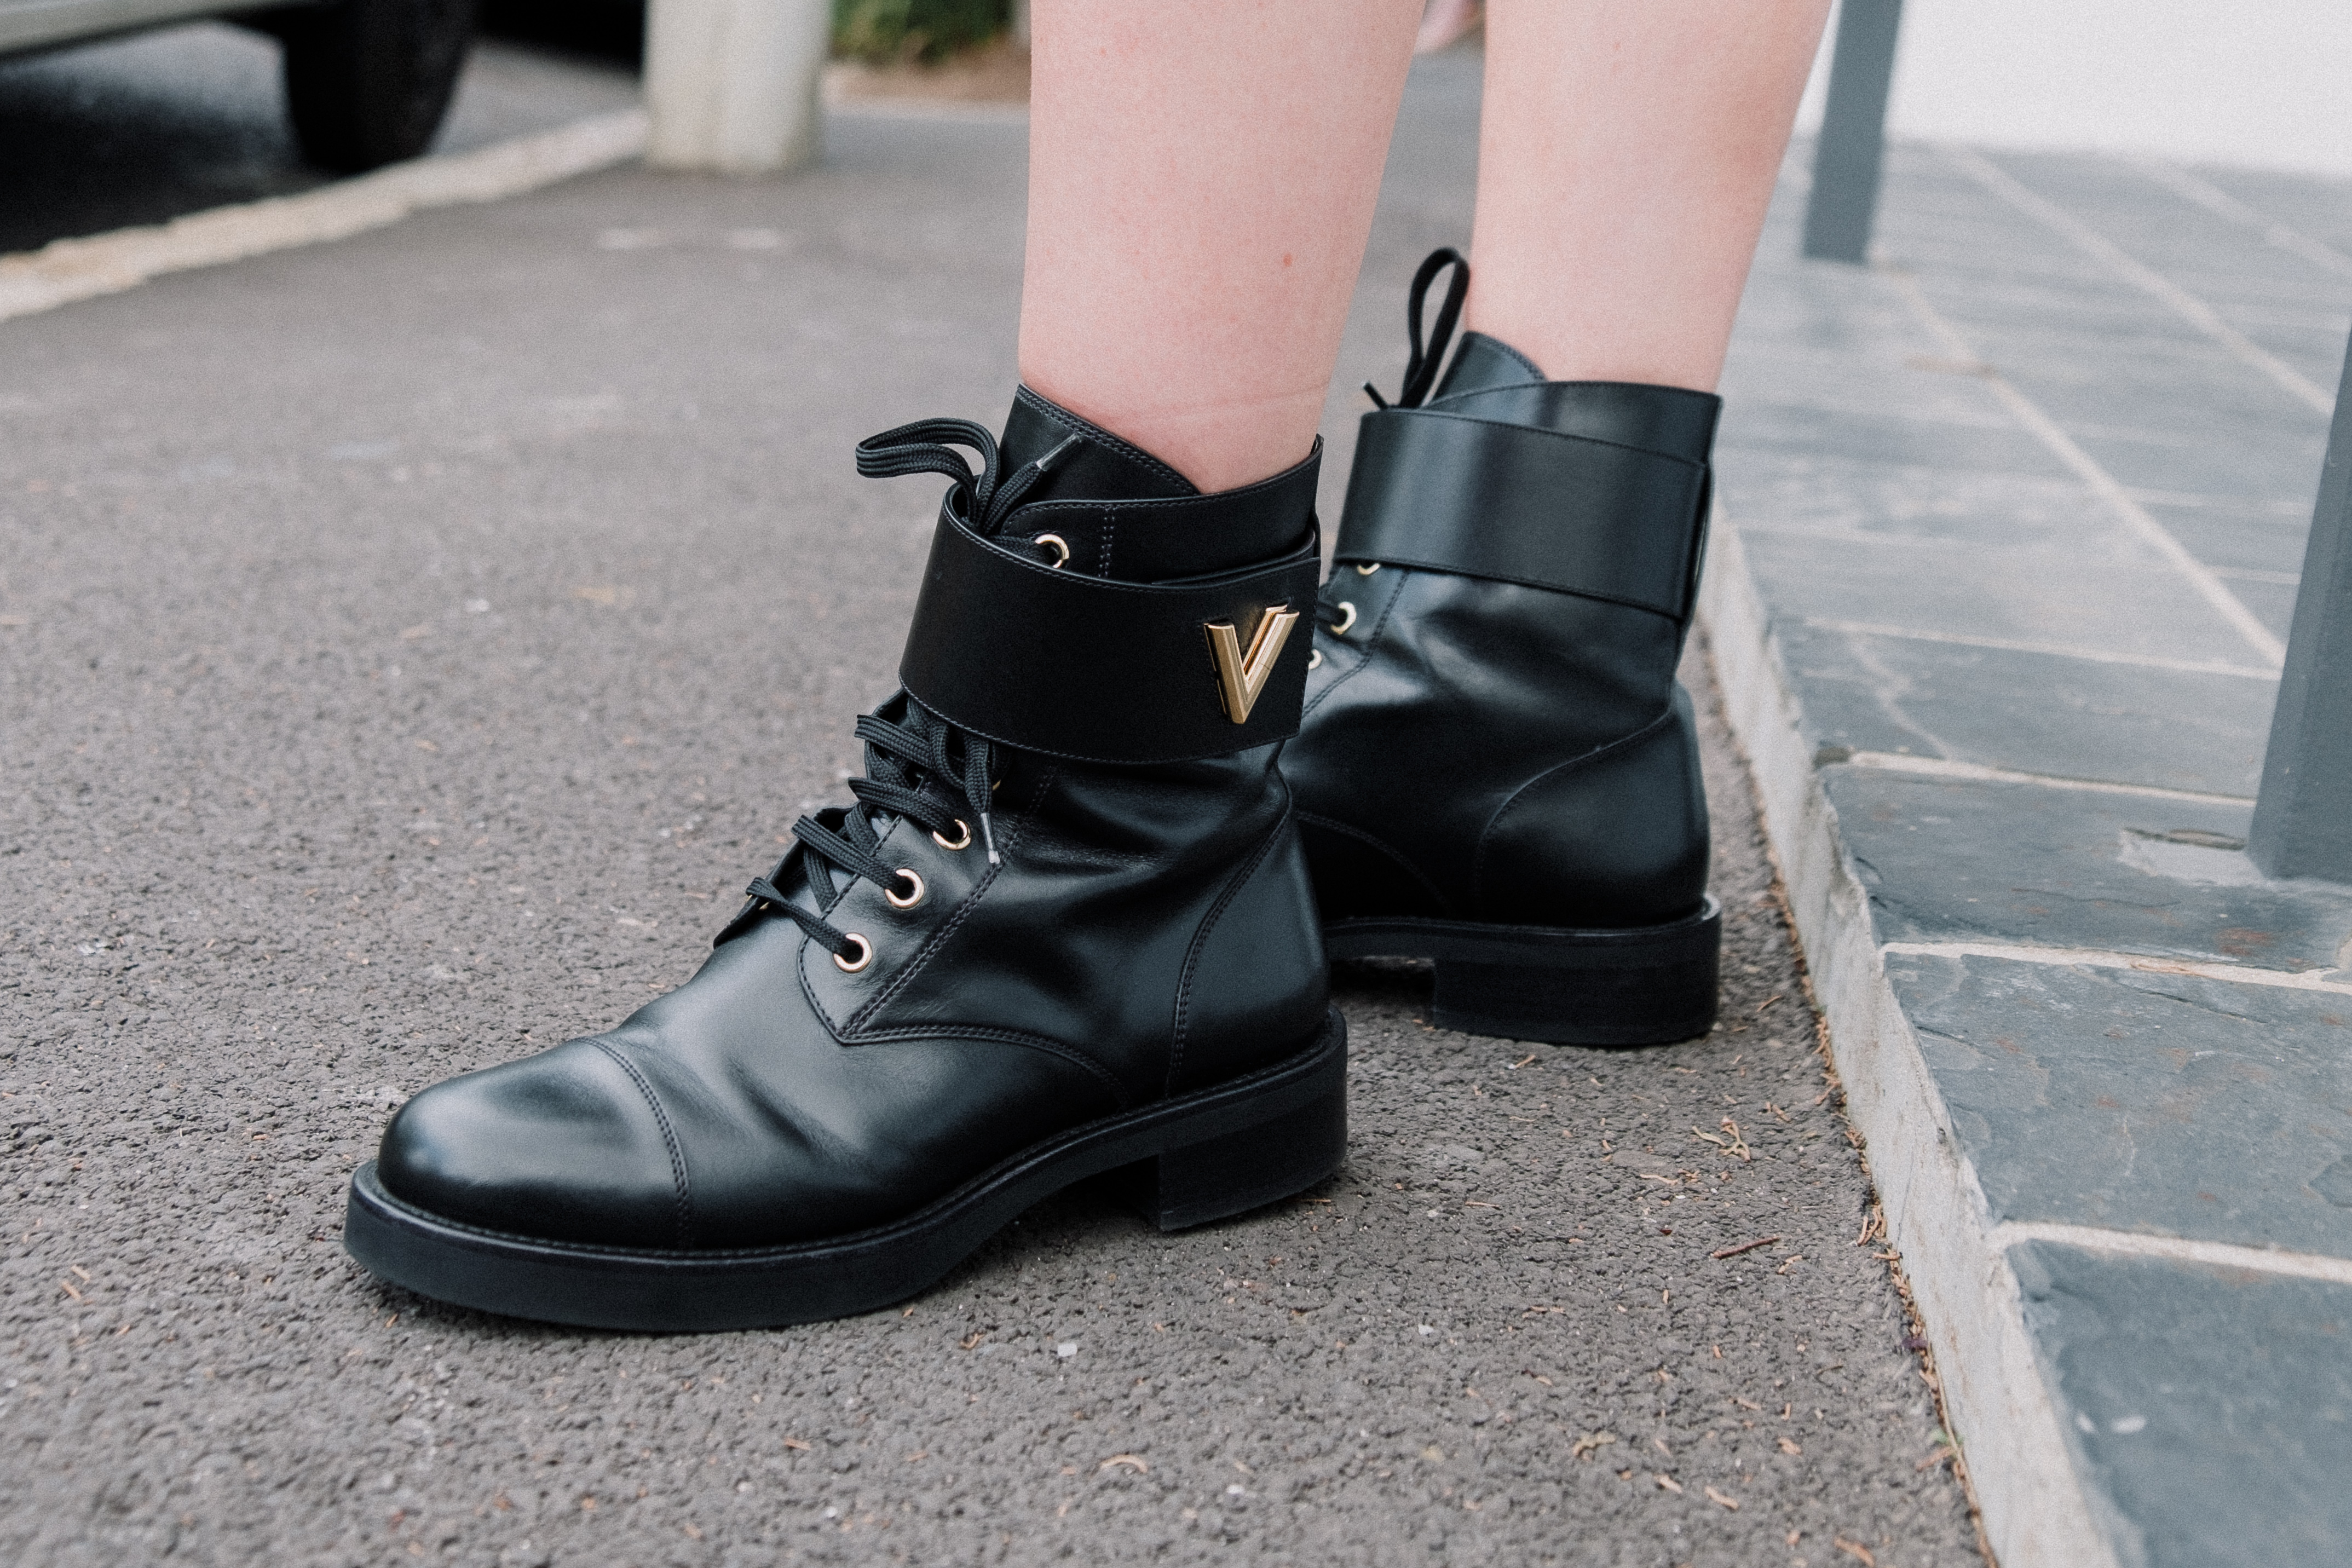 LOUIS VUITTON Leather Wonderland Ranger Twist Boots Black – S: 38 (5)